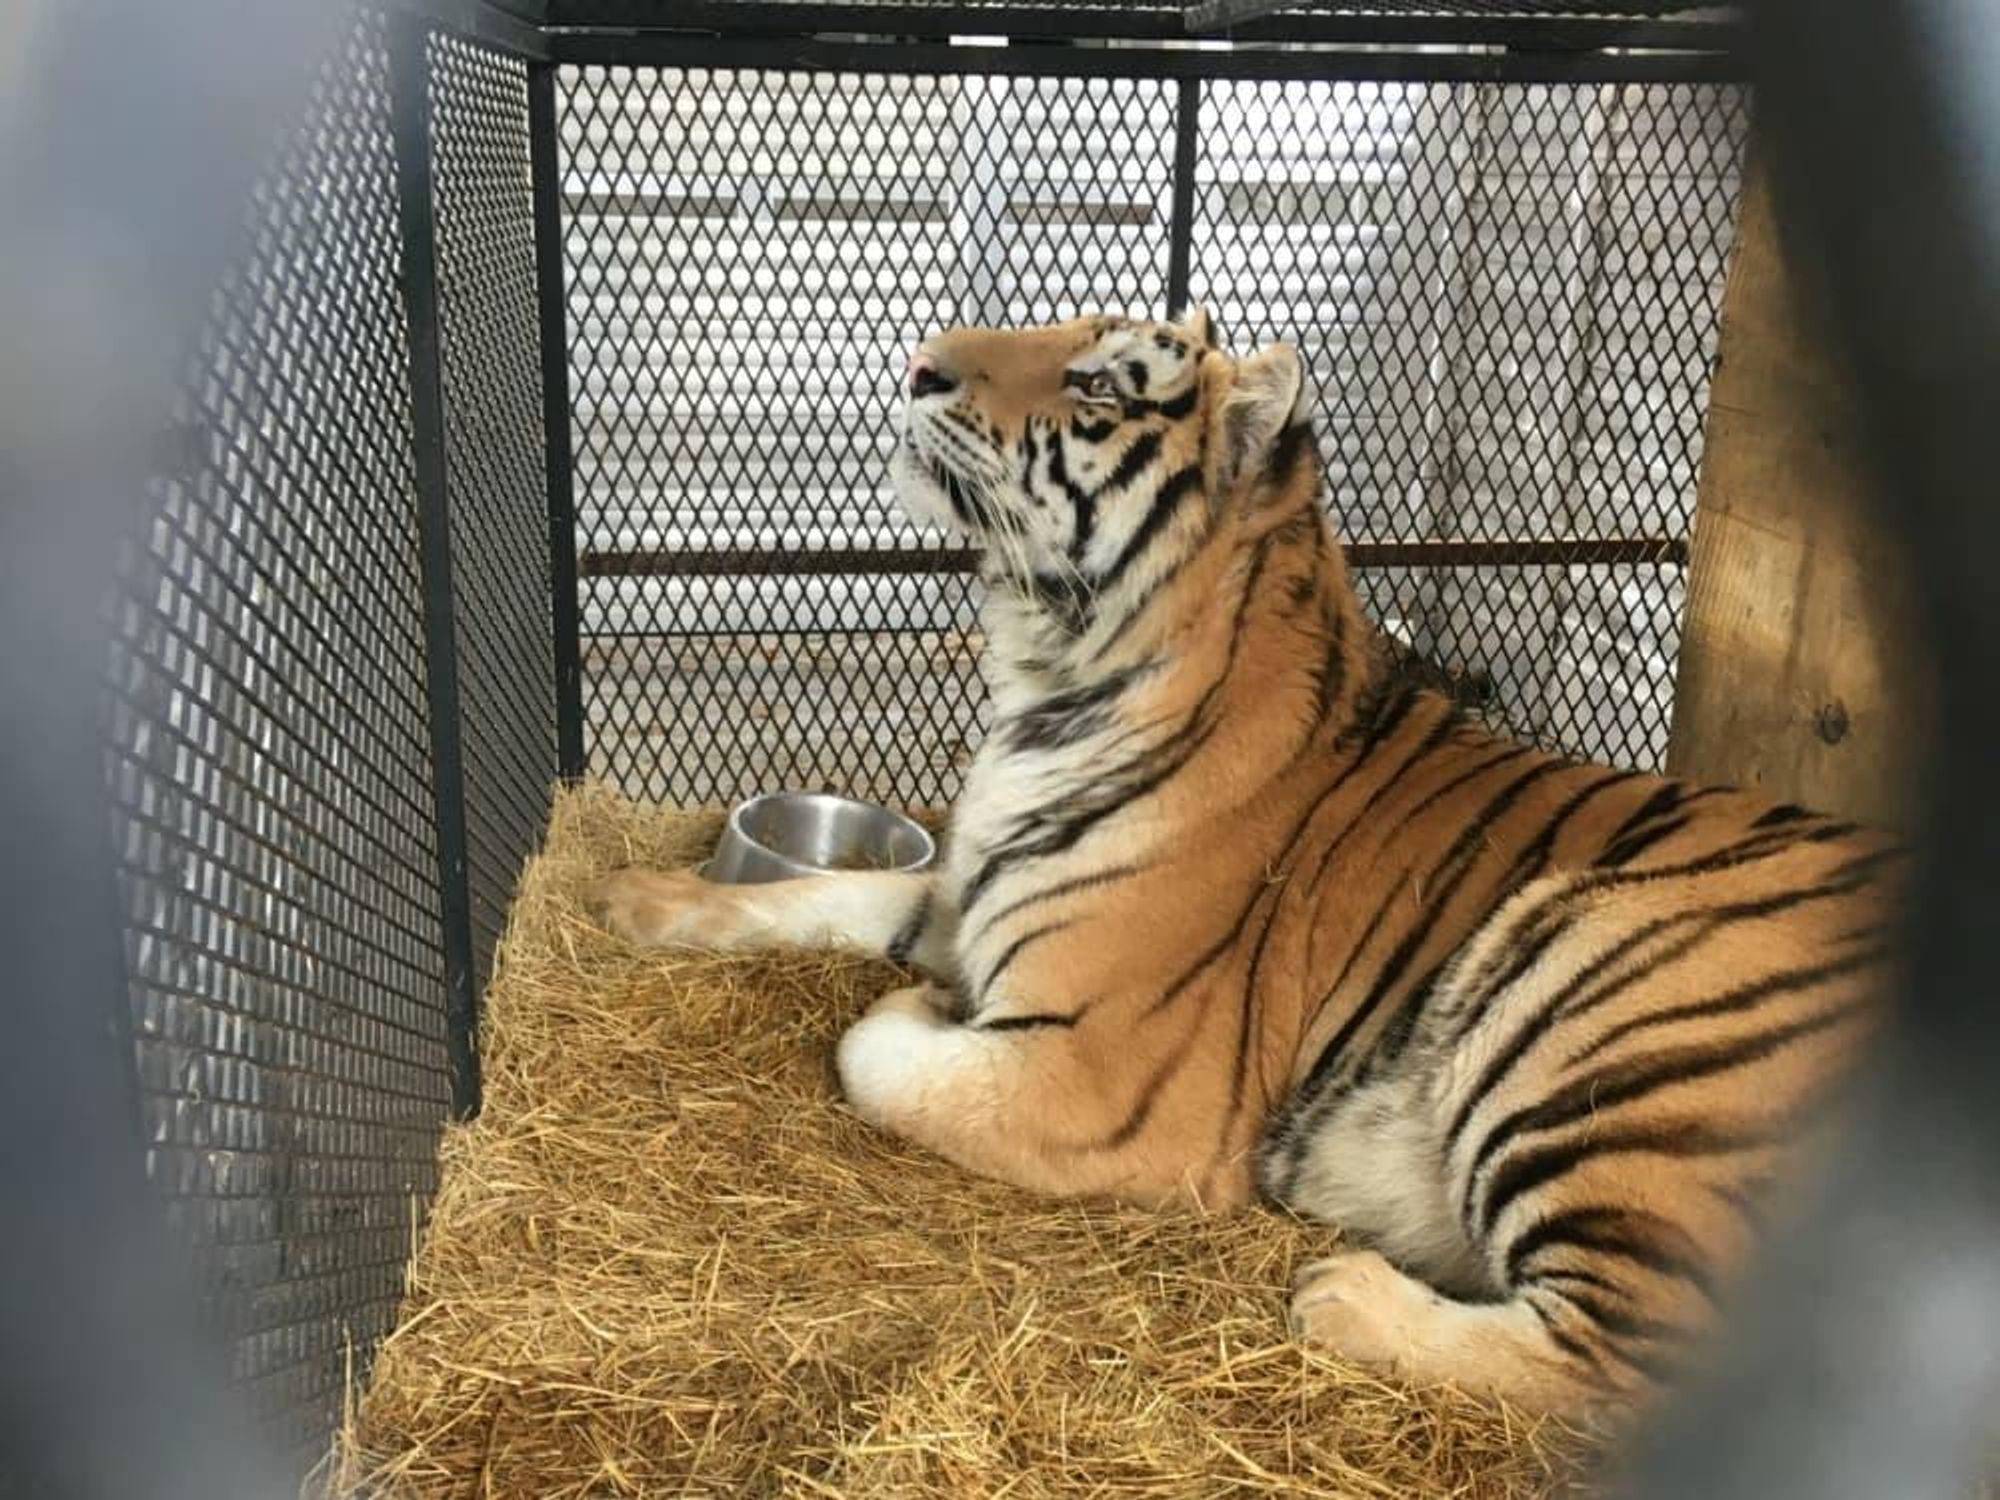 Dallas-area sanctuary rescues tiger found by stoner in abandoned home -  CultureMap Dallas